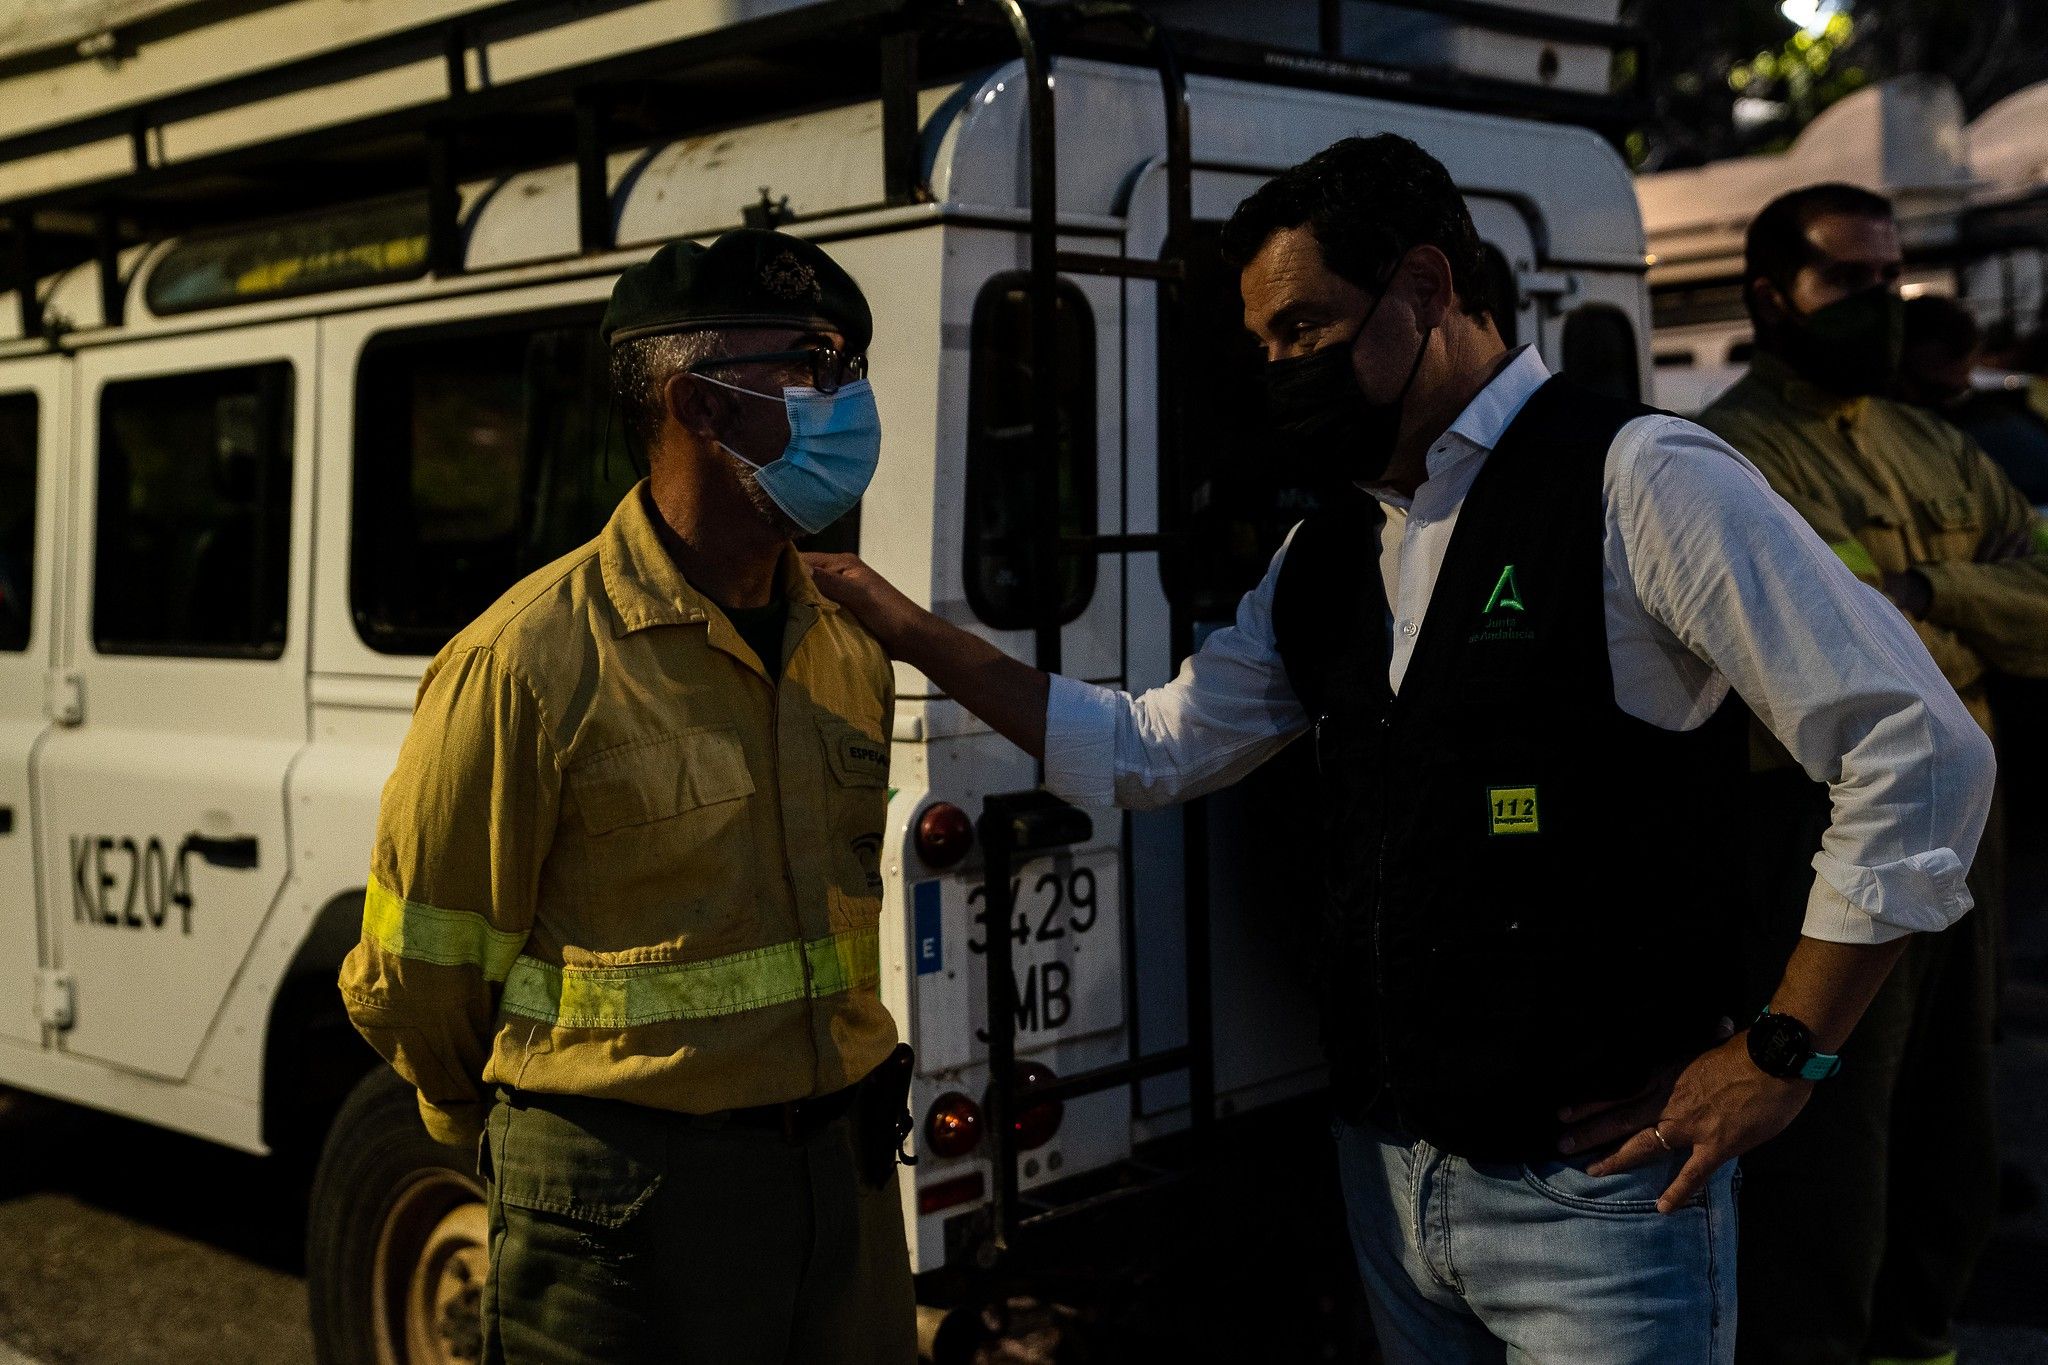 De héroes en Sierra Bermeja a la calle: Moreno manda al paro el día 15 a 700 bomberos del Infoca